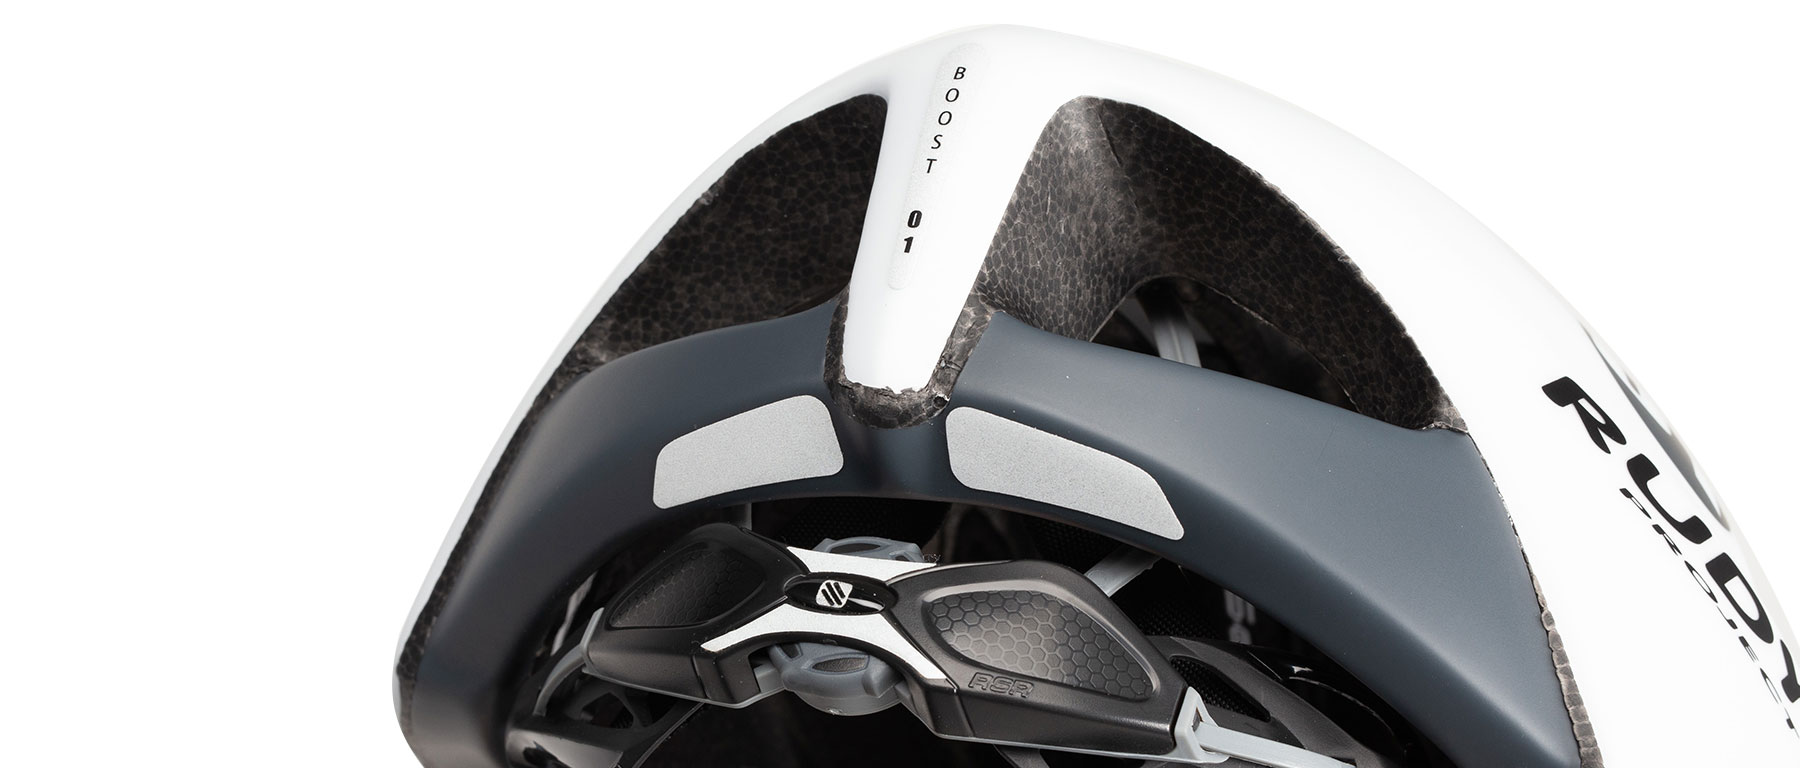 Rudy Project Boost 01 Helmet w Optical Shield